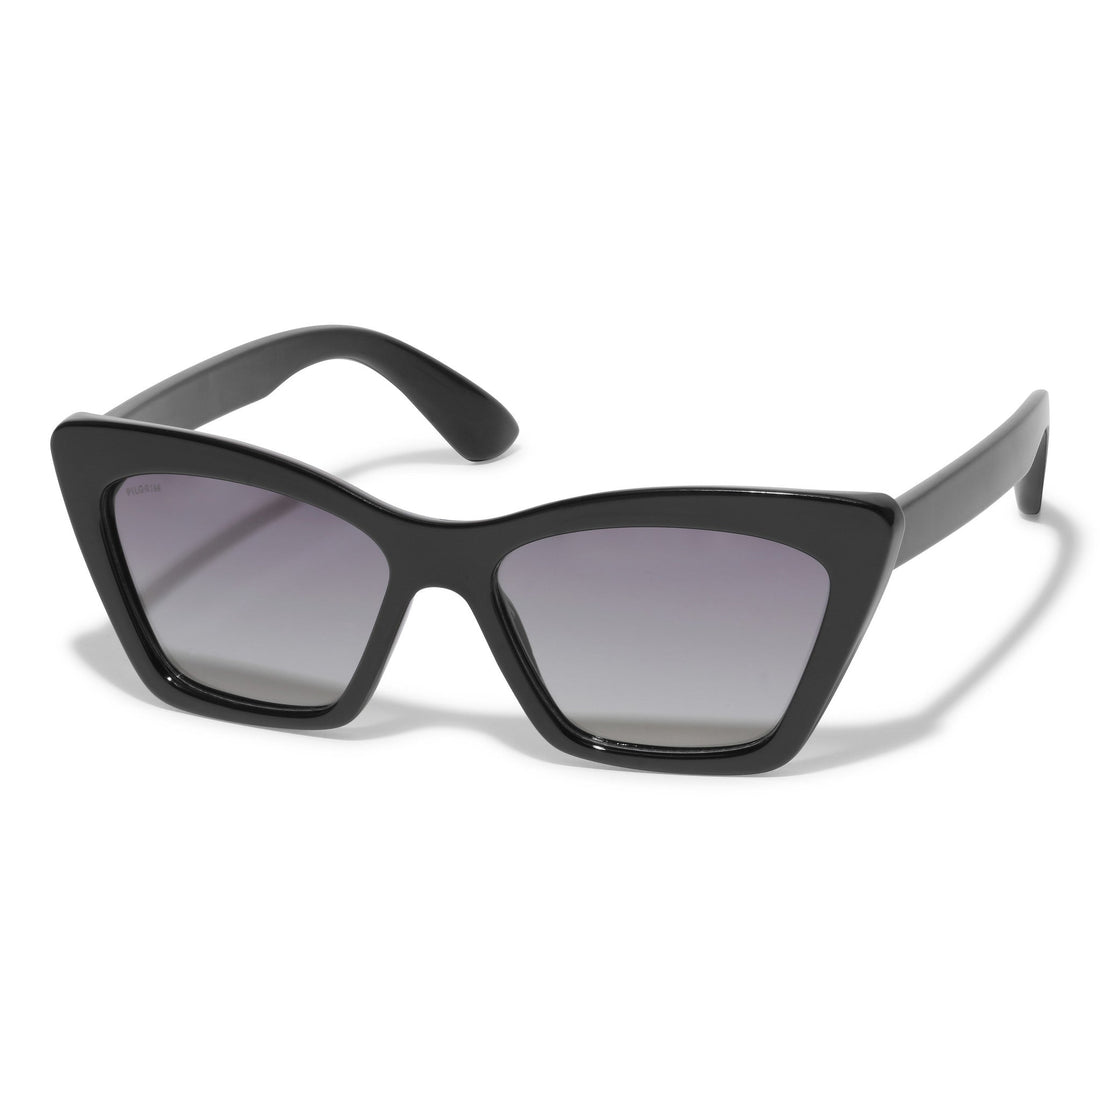 Dakota Black Sunglasses - PILGRIM